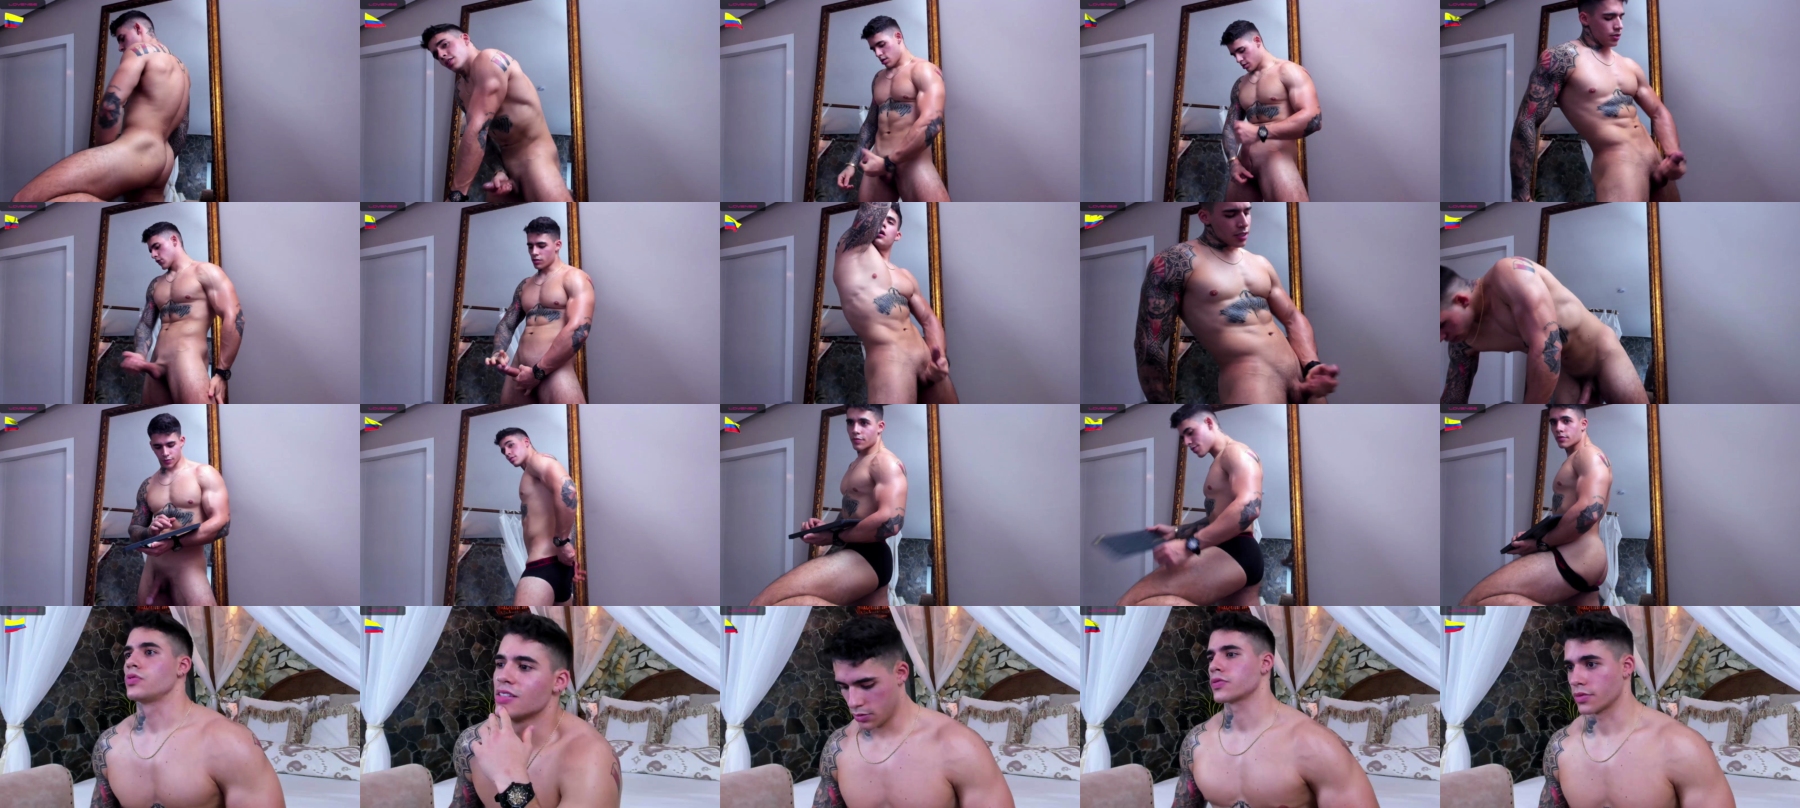 Dominic_Sullivan1  06-08-2021 Male Naked